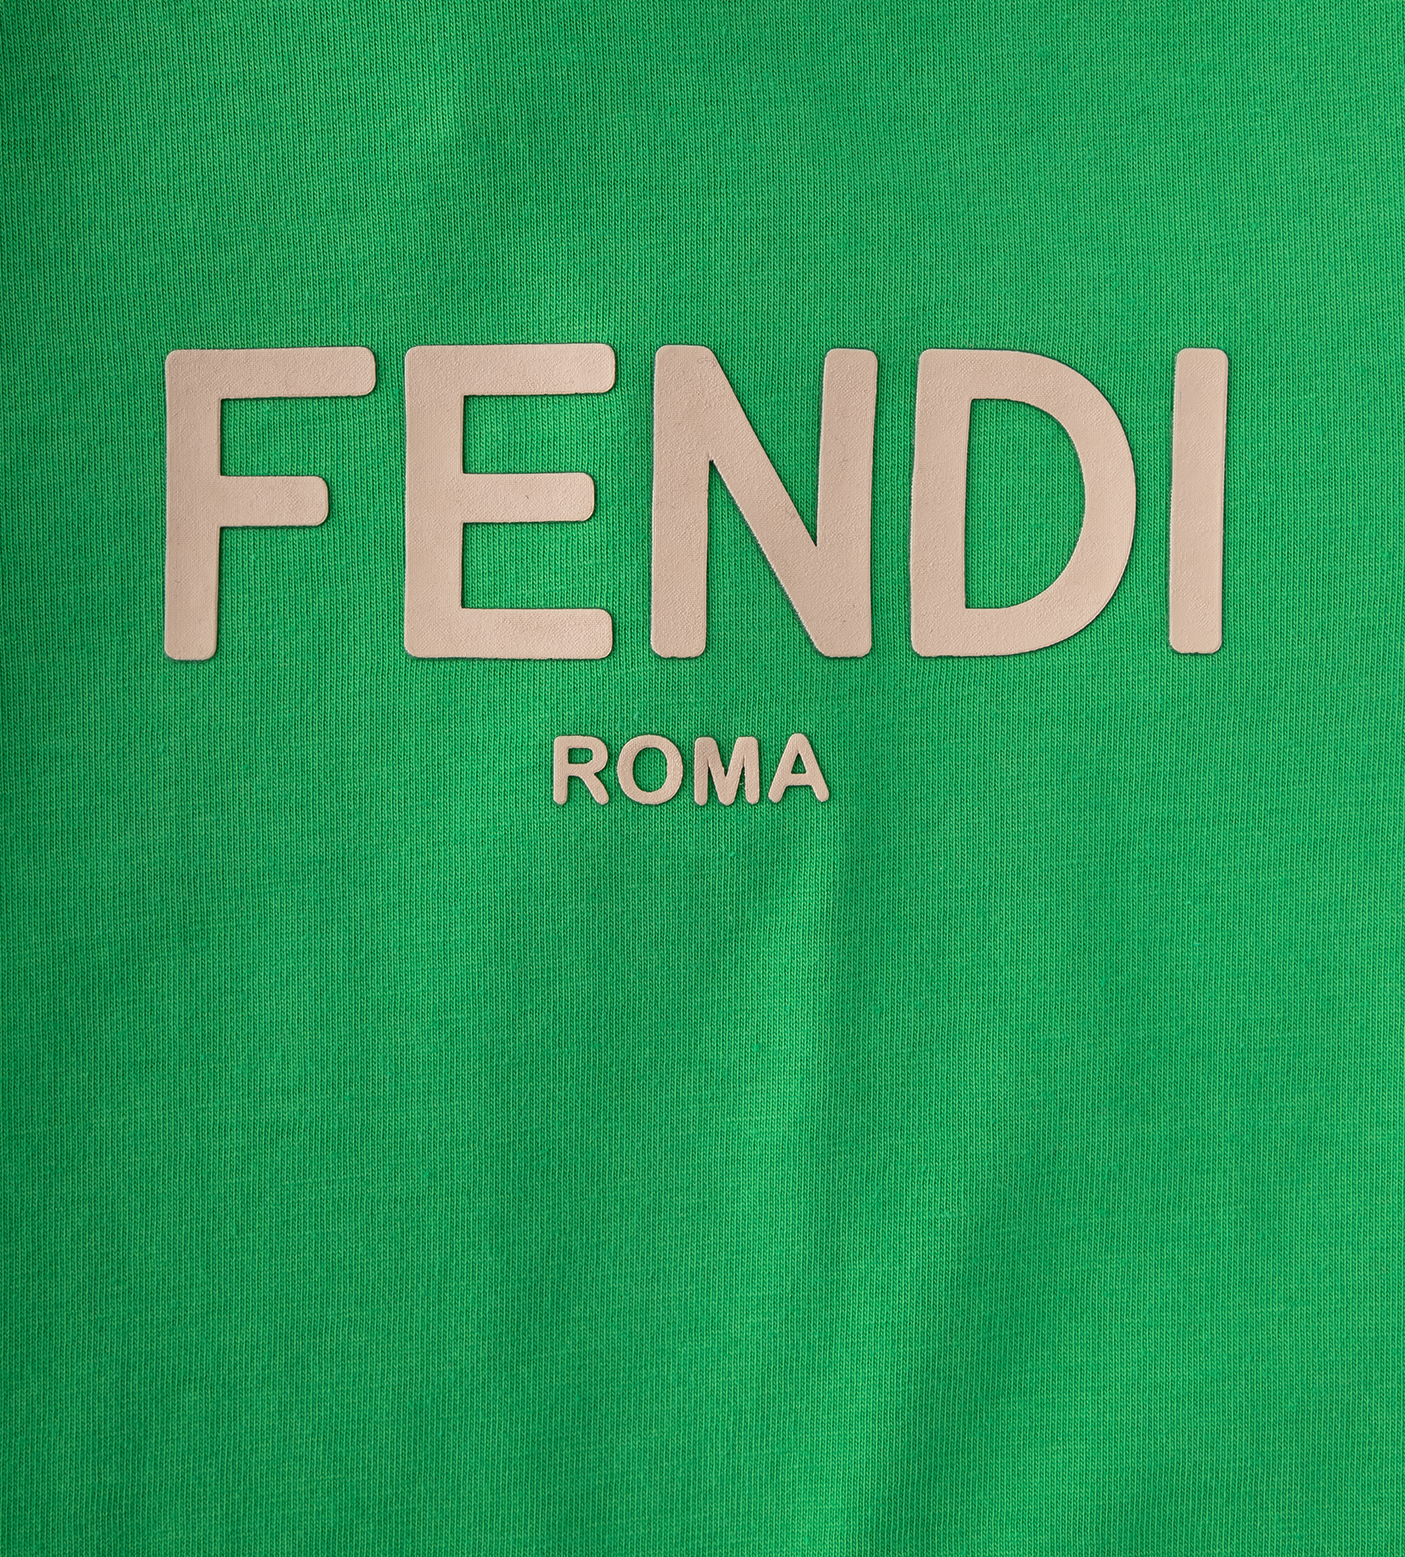 Baby Fendi Roma T-shirt Green